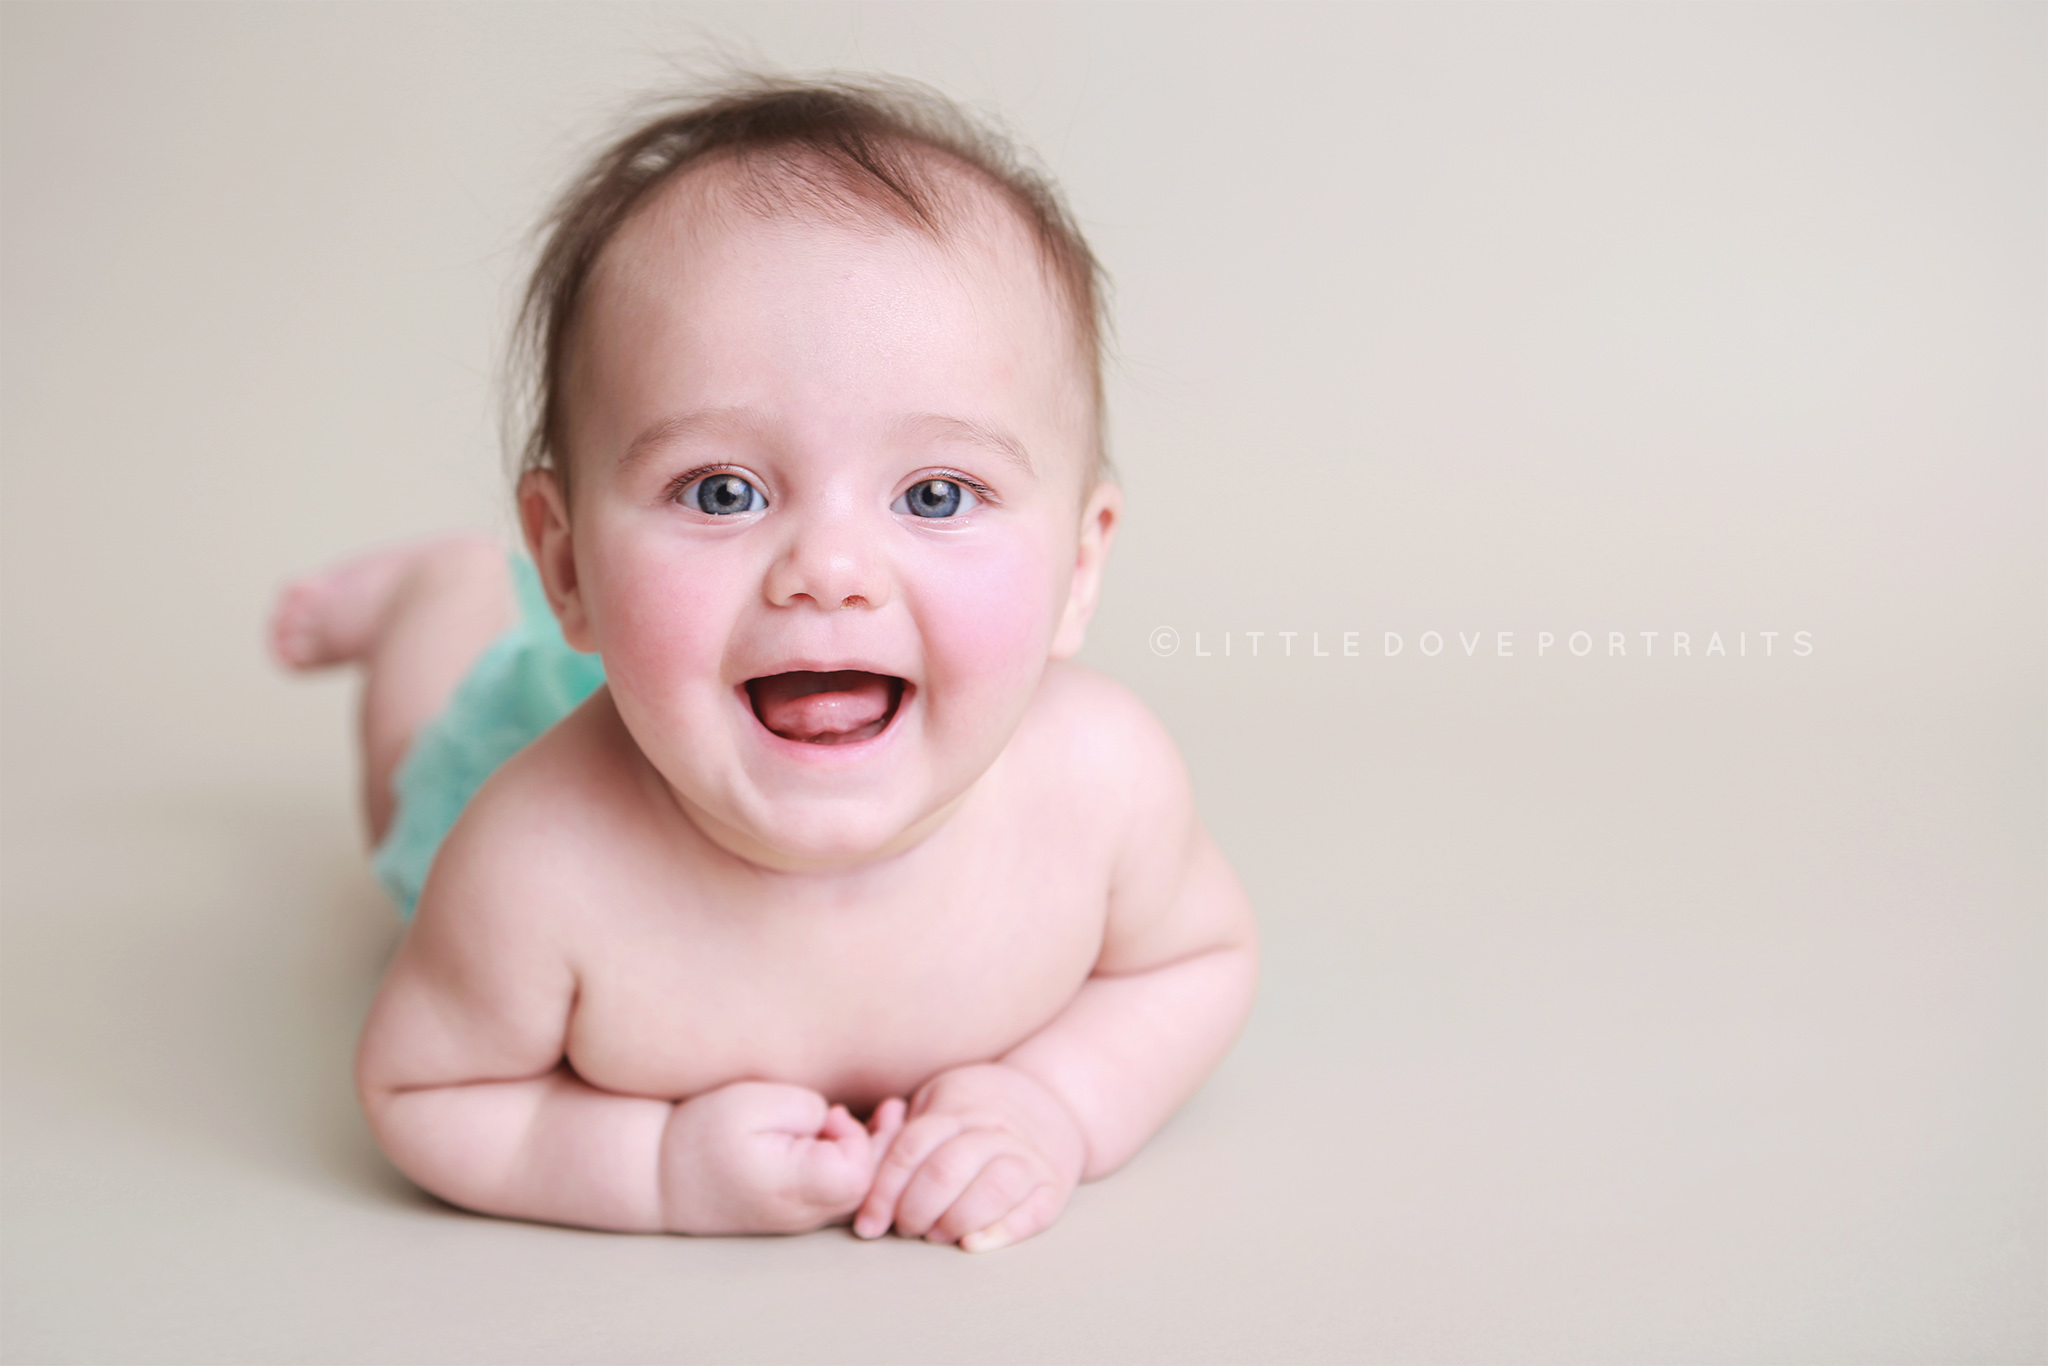 Little Dove Portraits - Dallas Newborn & Baby Milestone Photographer #newbornphotographer #album #milestonephotos